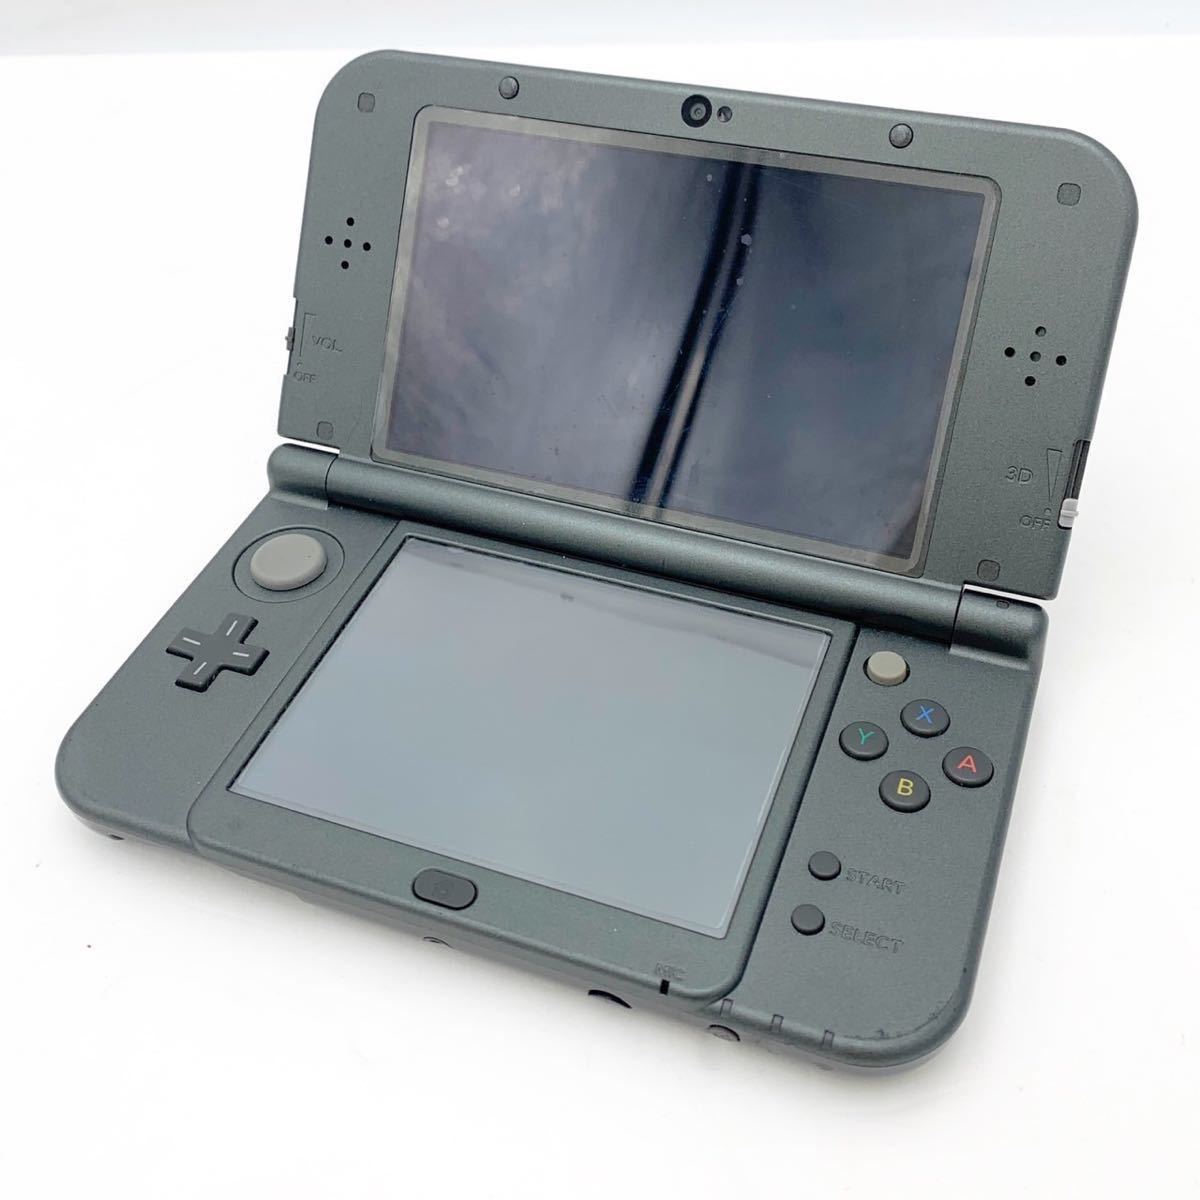 New Nintendo 3DS LL RED-001 ソフト付 任天堂 メタリックブラック DS